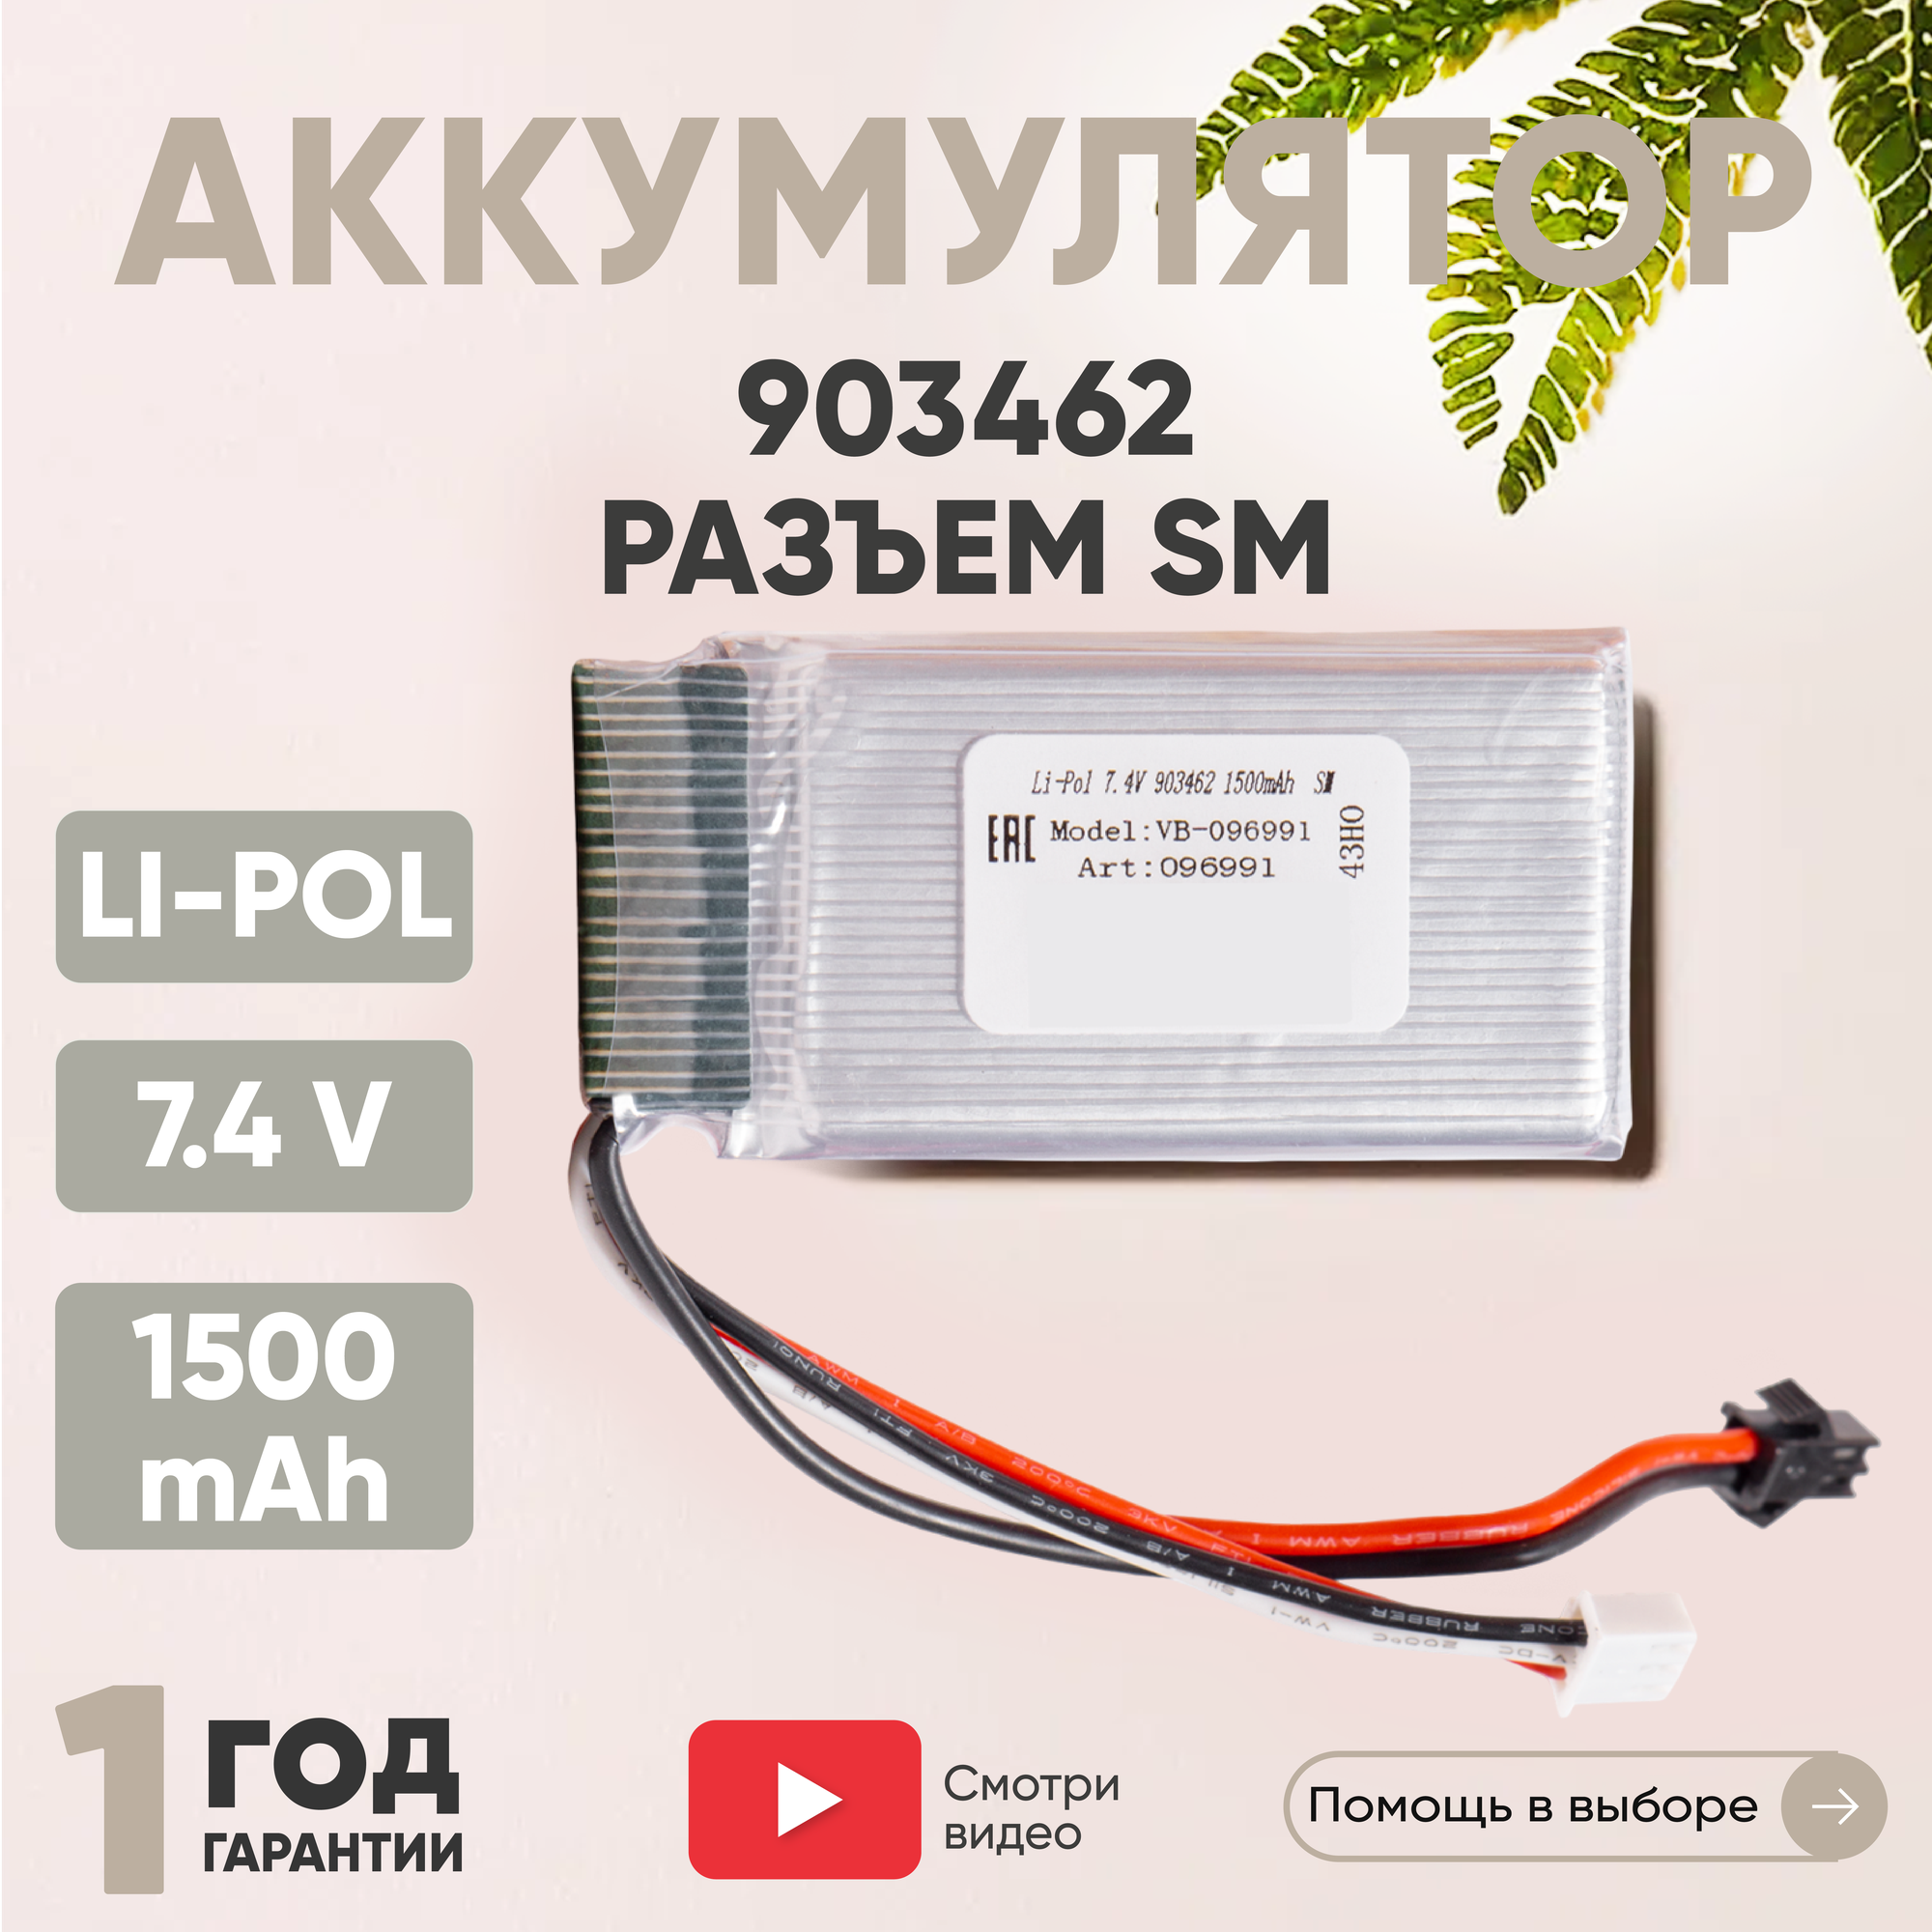 Аккумуляторная батарея (АКБ, аккумулятор) 903462, разъем SM, 1500мАч, 7.4В, Li-Pol